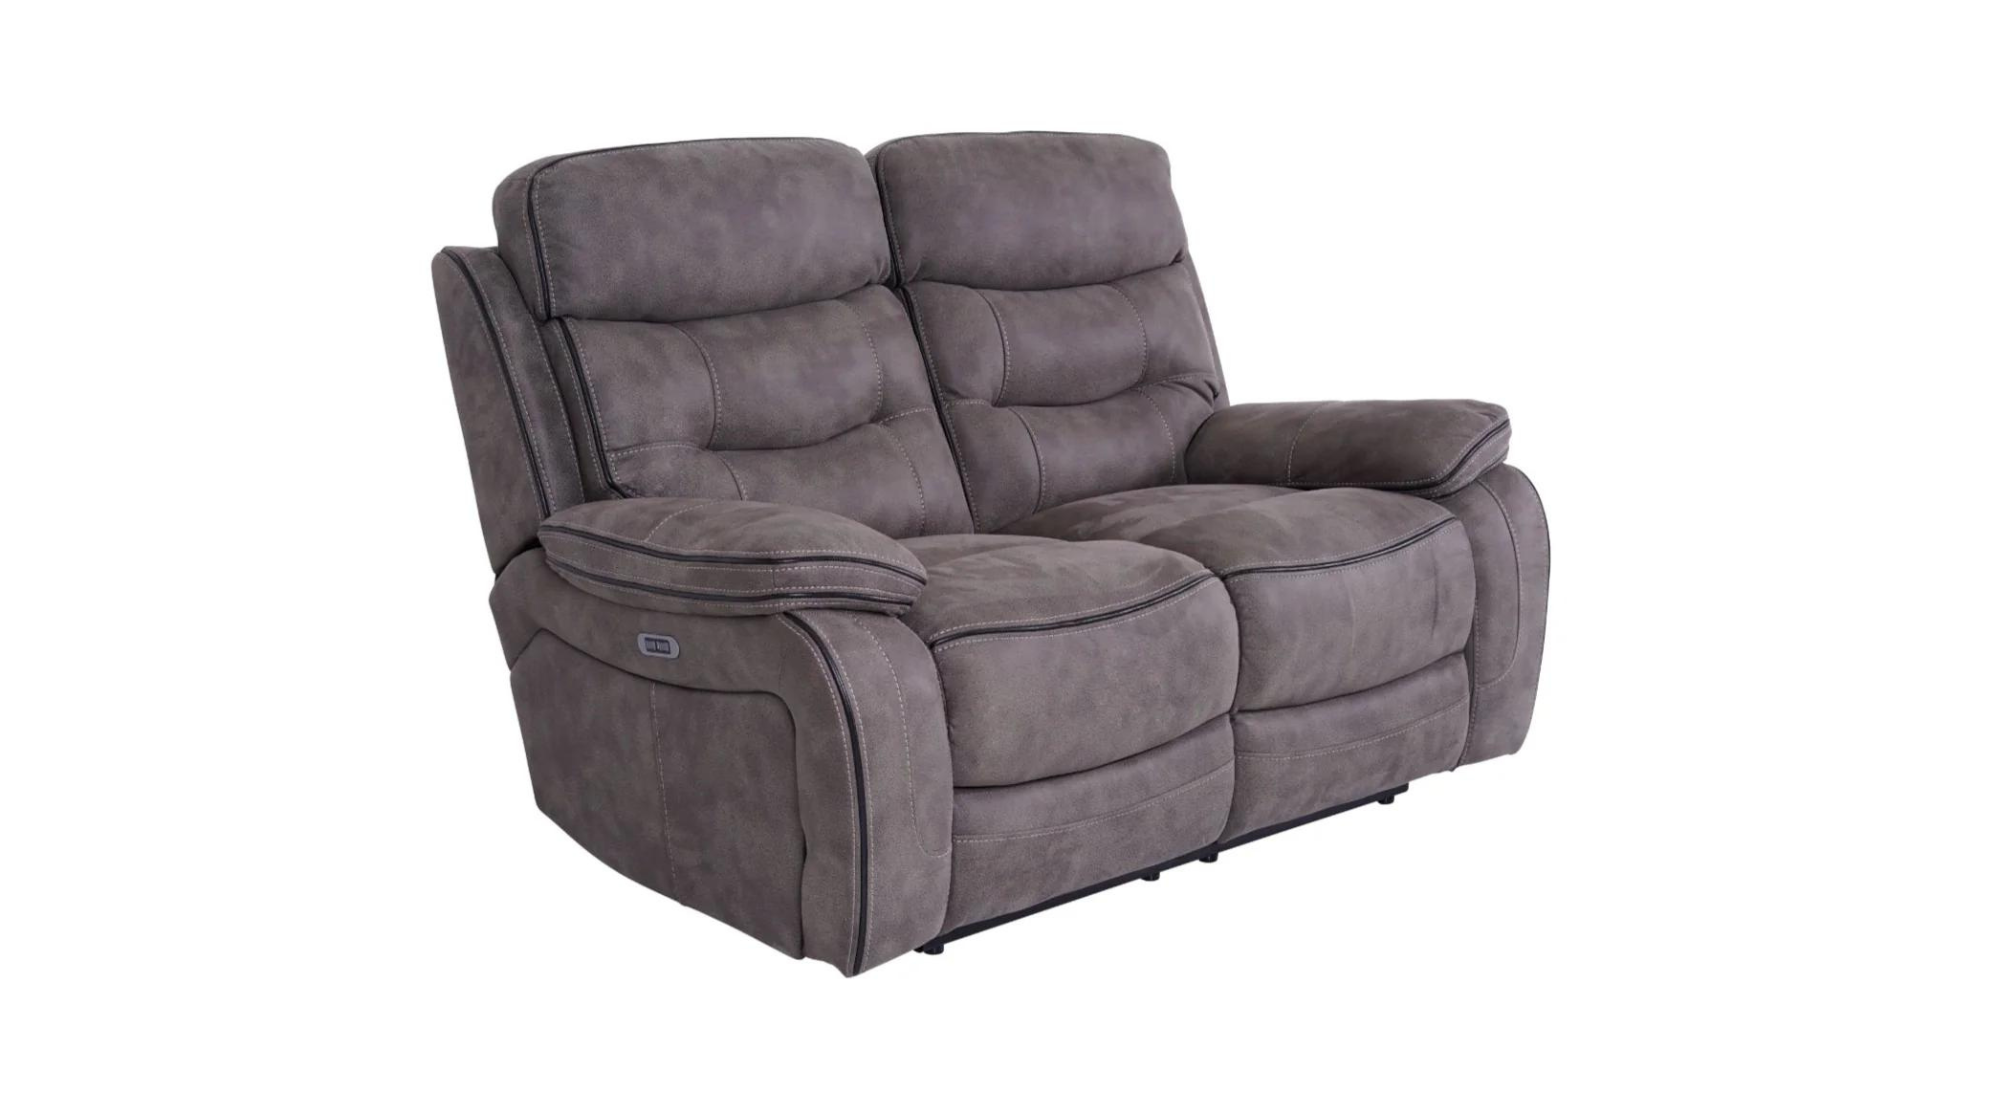 Noah 2 Seater Recliner Grey Fabric Sofa - Brand New